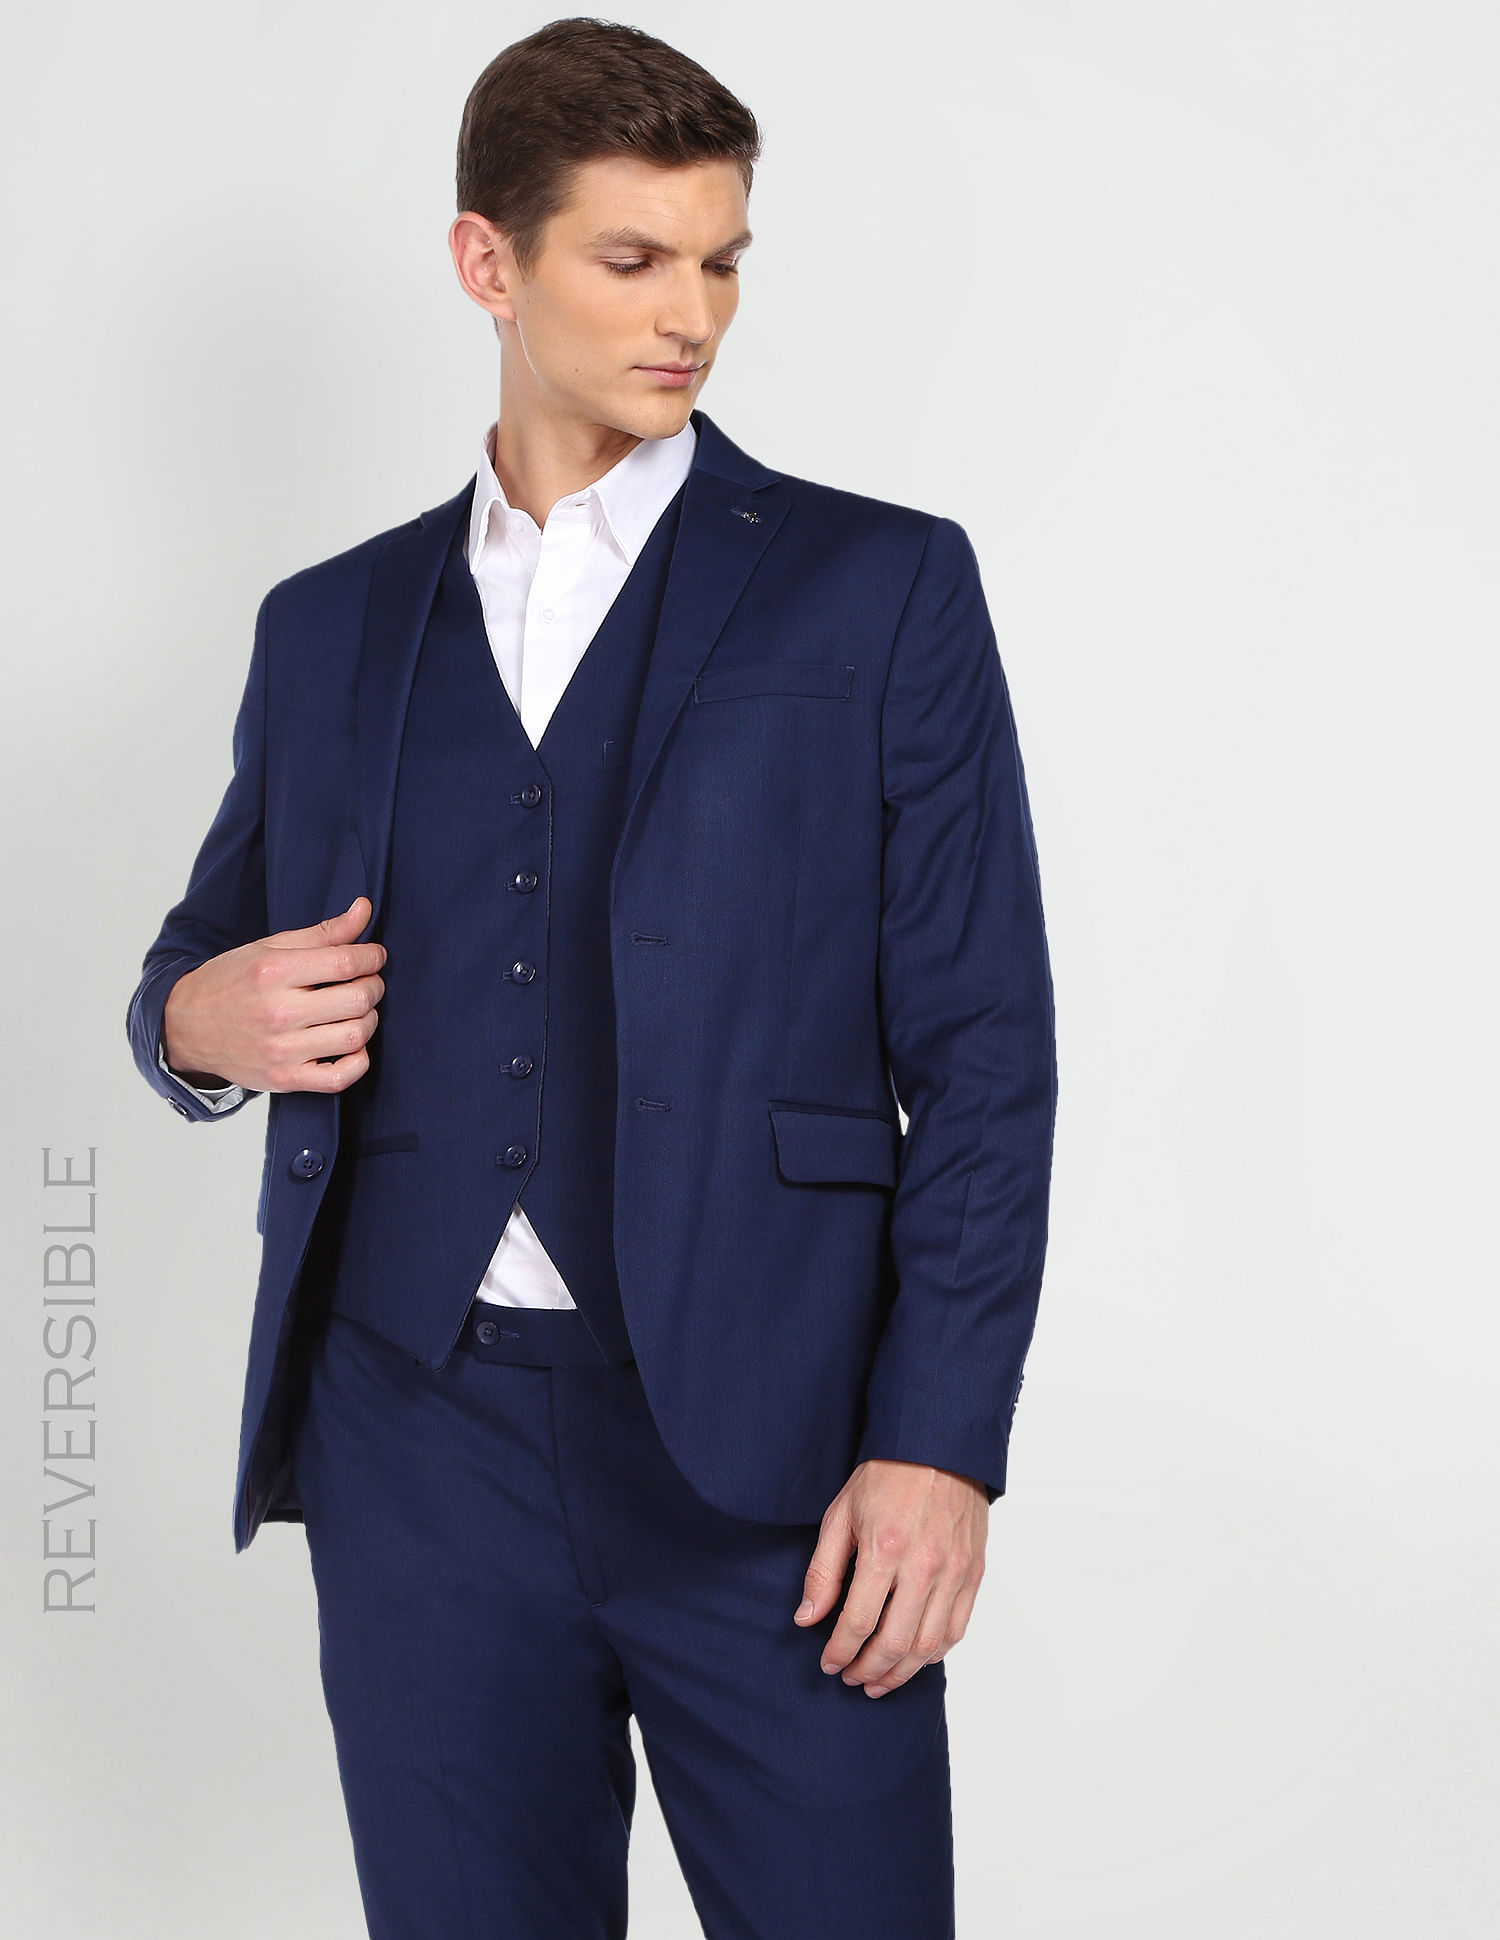 Slim FIt Suit waistcoat - Dark blue - Men | H&M IN